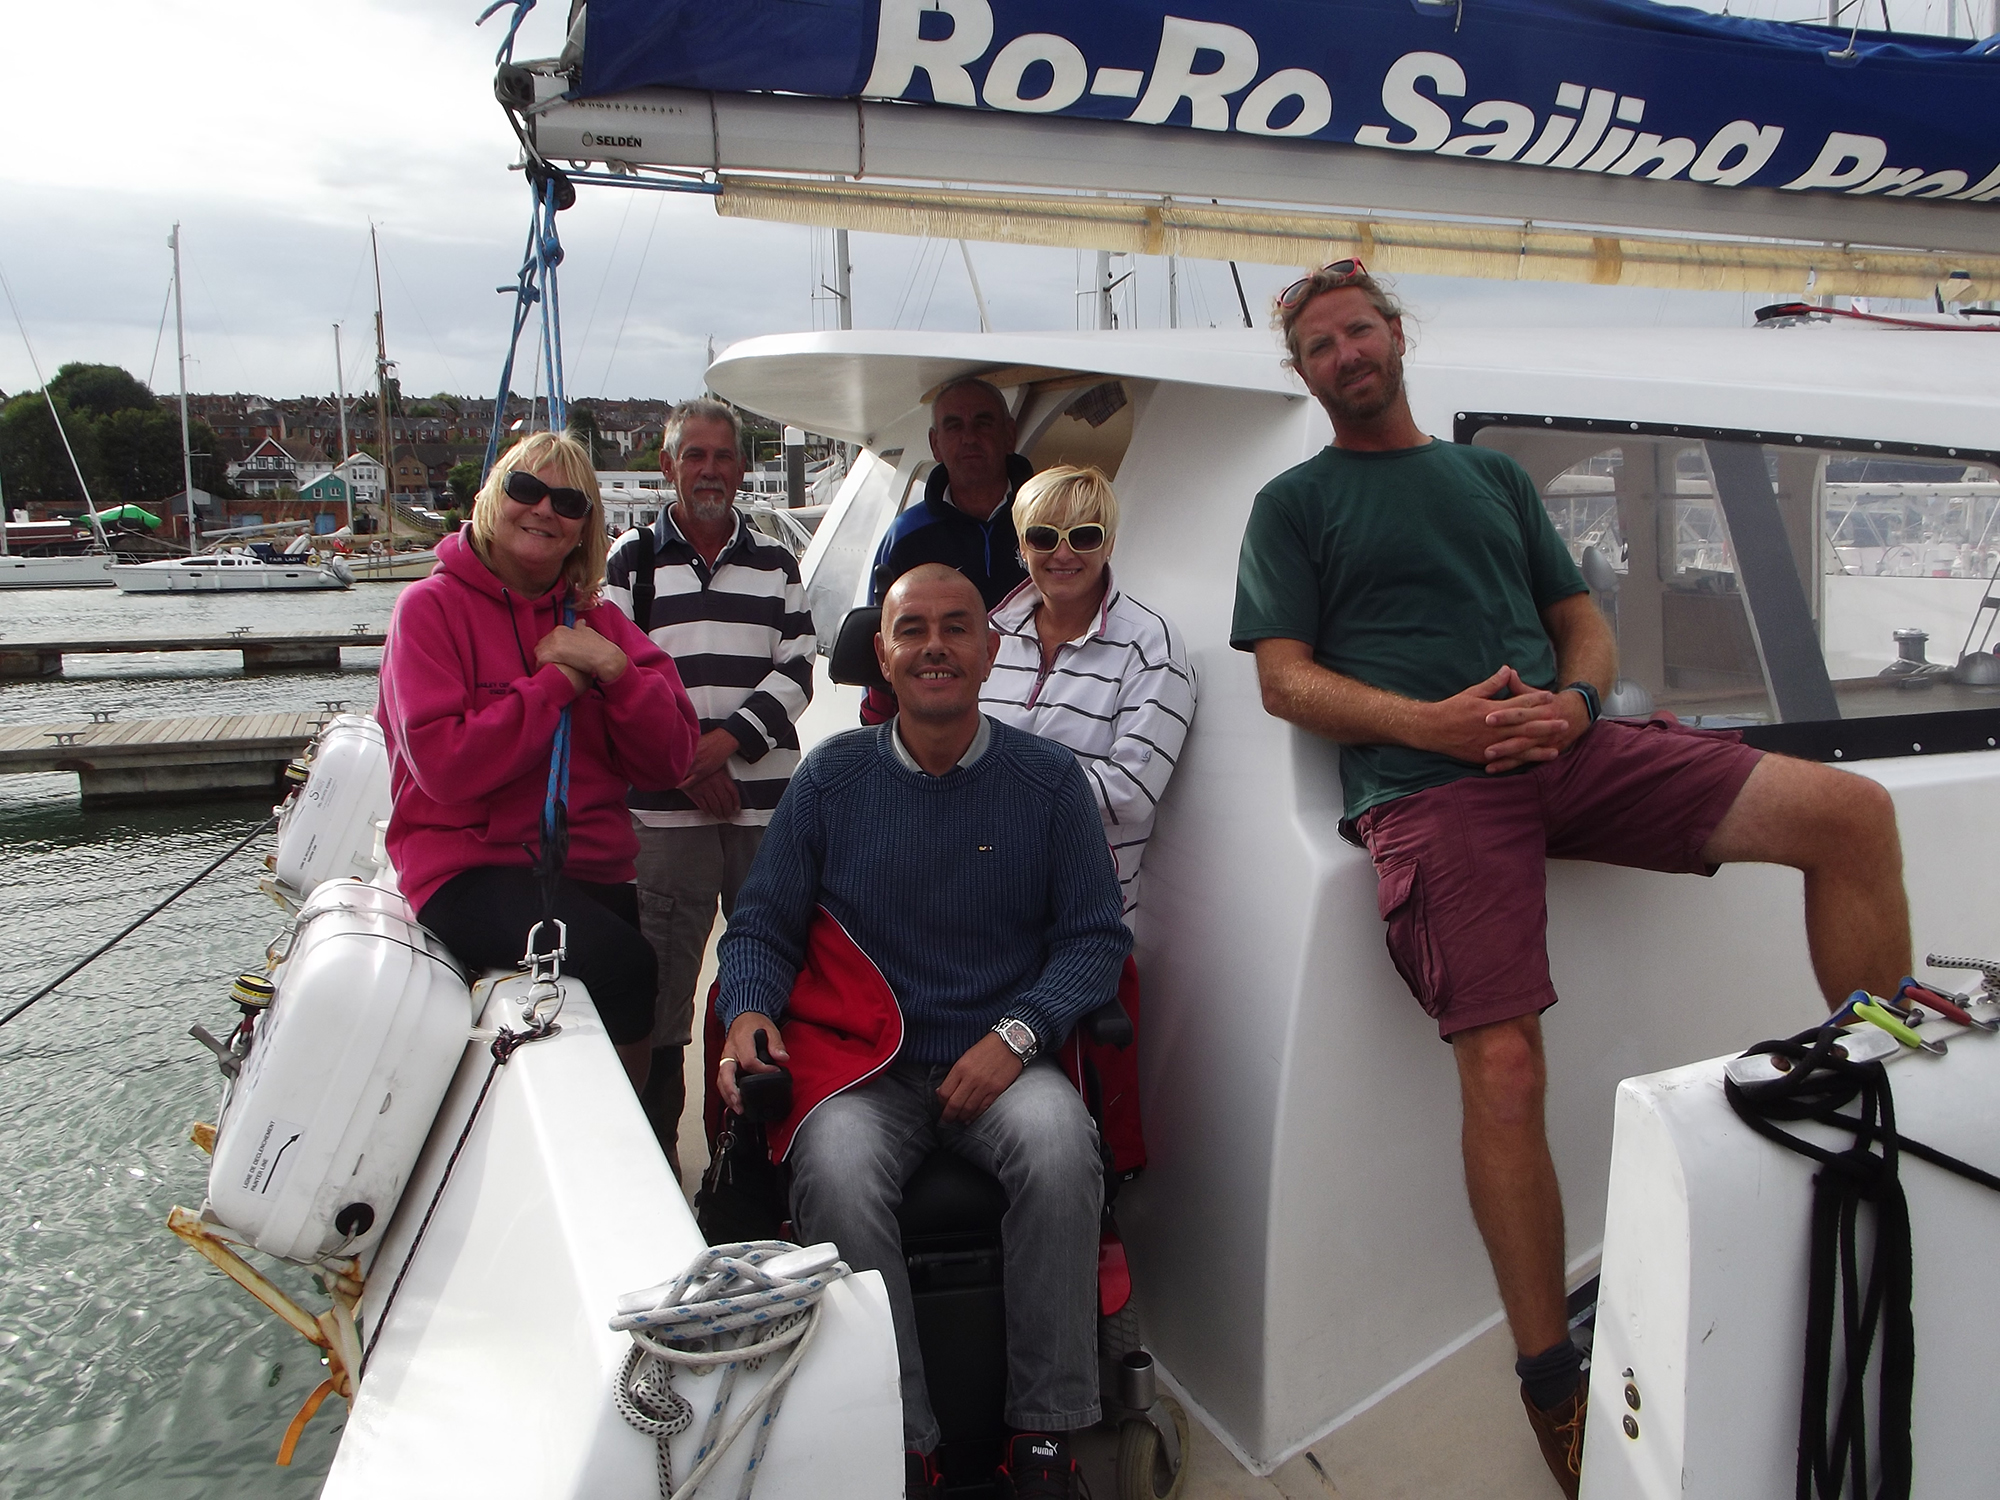 The crew on the first day sail: Bev Beadsworth, Collin Turner, Chris Darley (Mate), John Jemson, Kay Read, John Douglas (Skipper) and Robin Whitehead (on Camera).